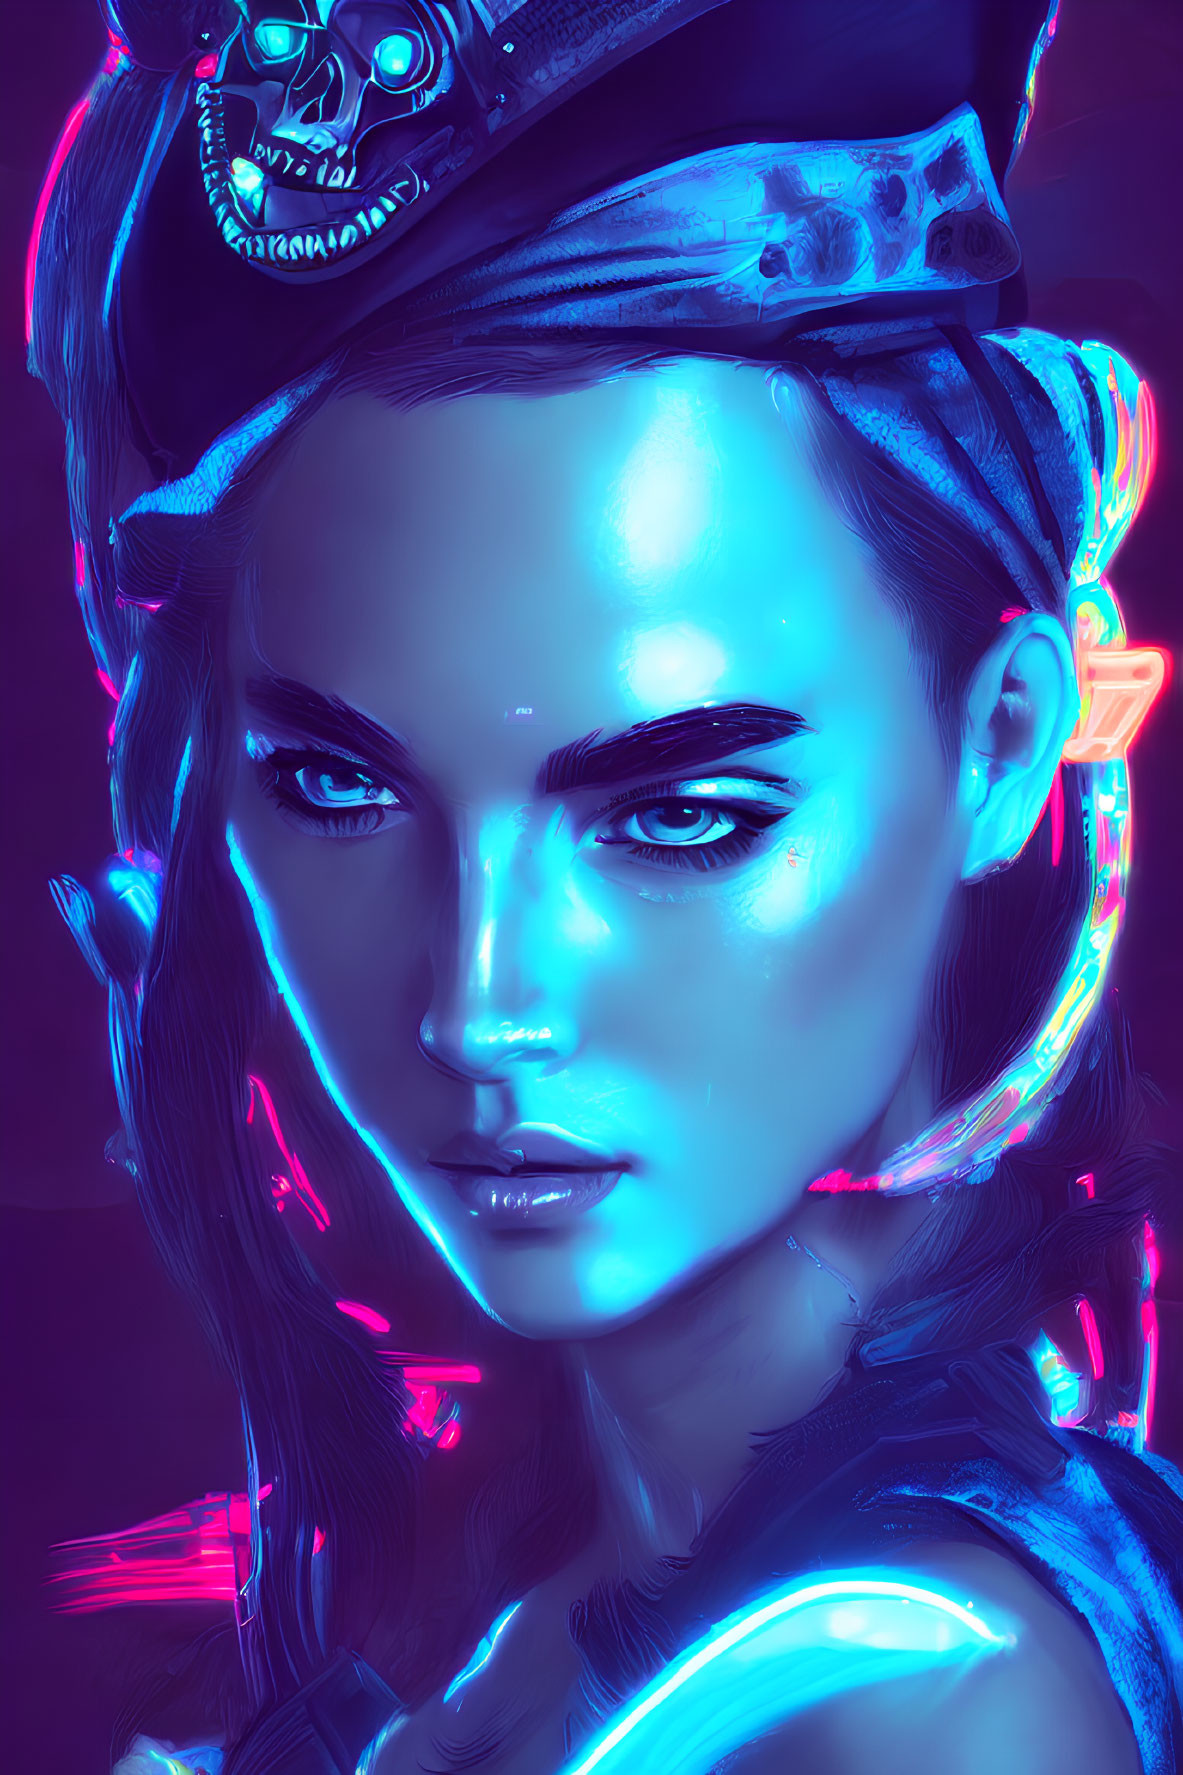 Futuristic cyberpunk digital art with blue neon lighting